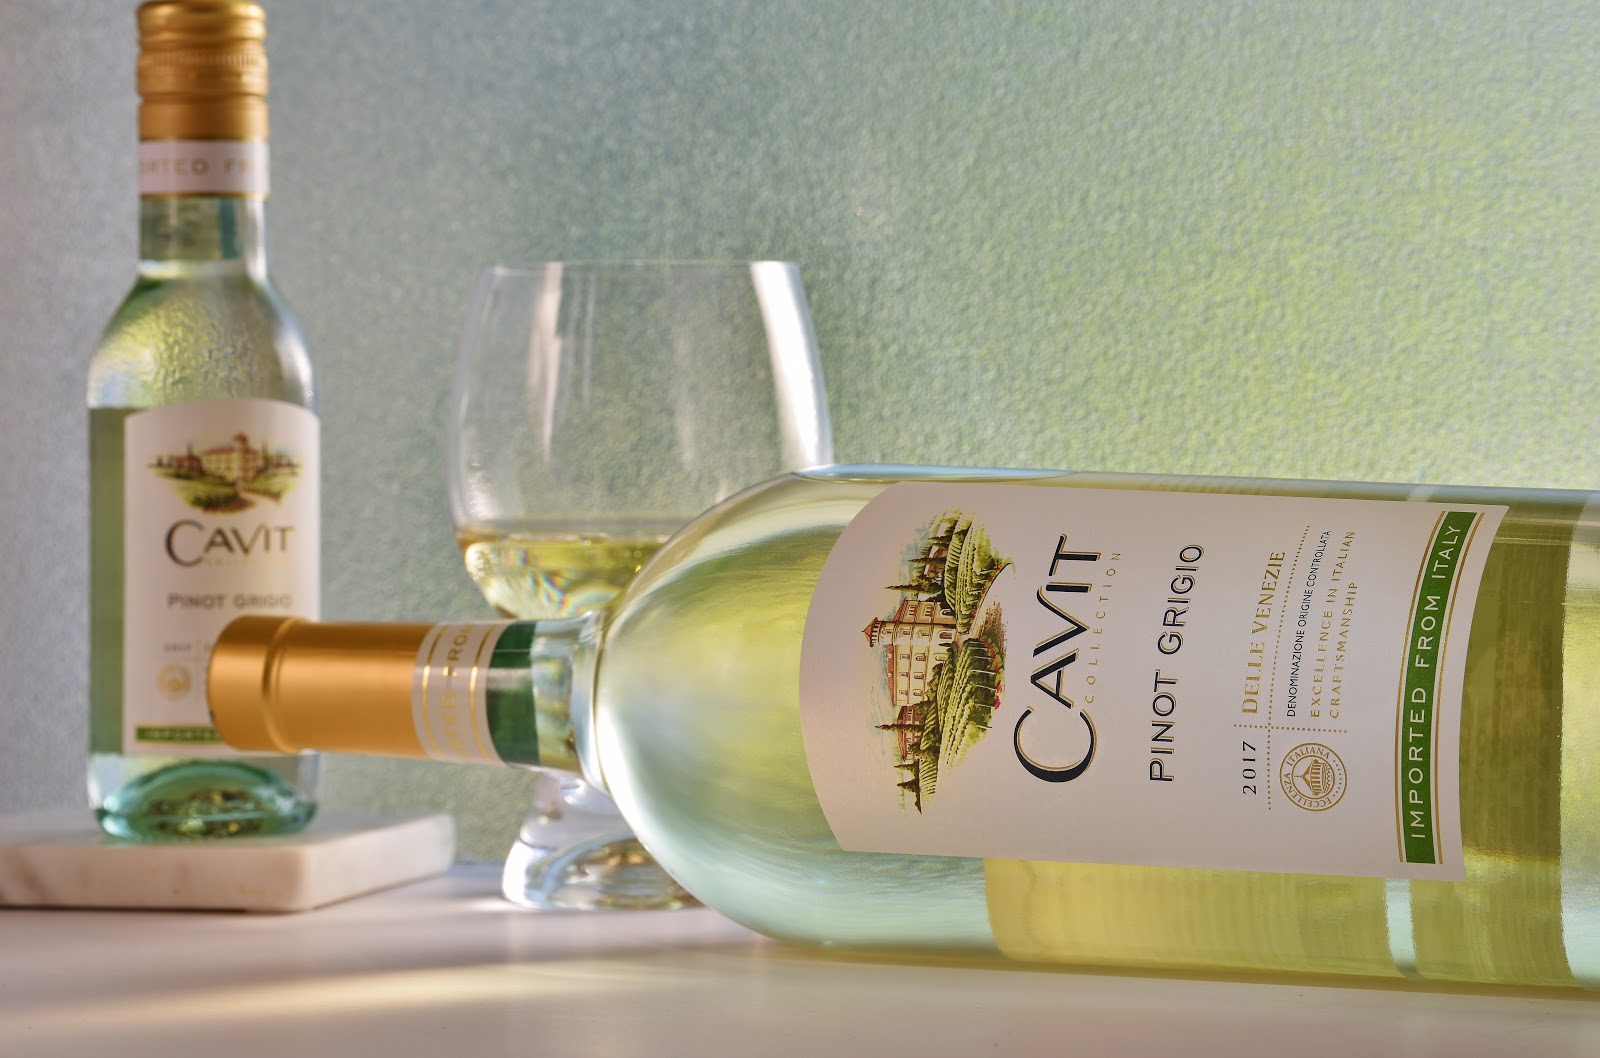 Is Cavit Wine Good